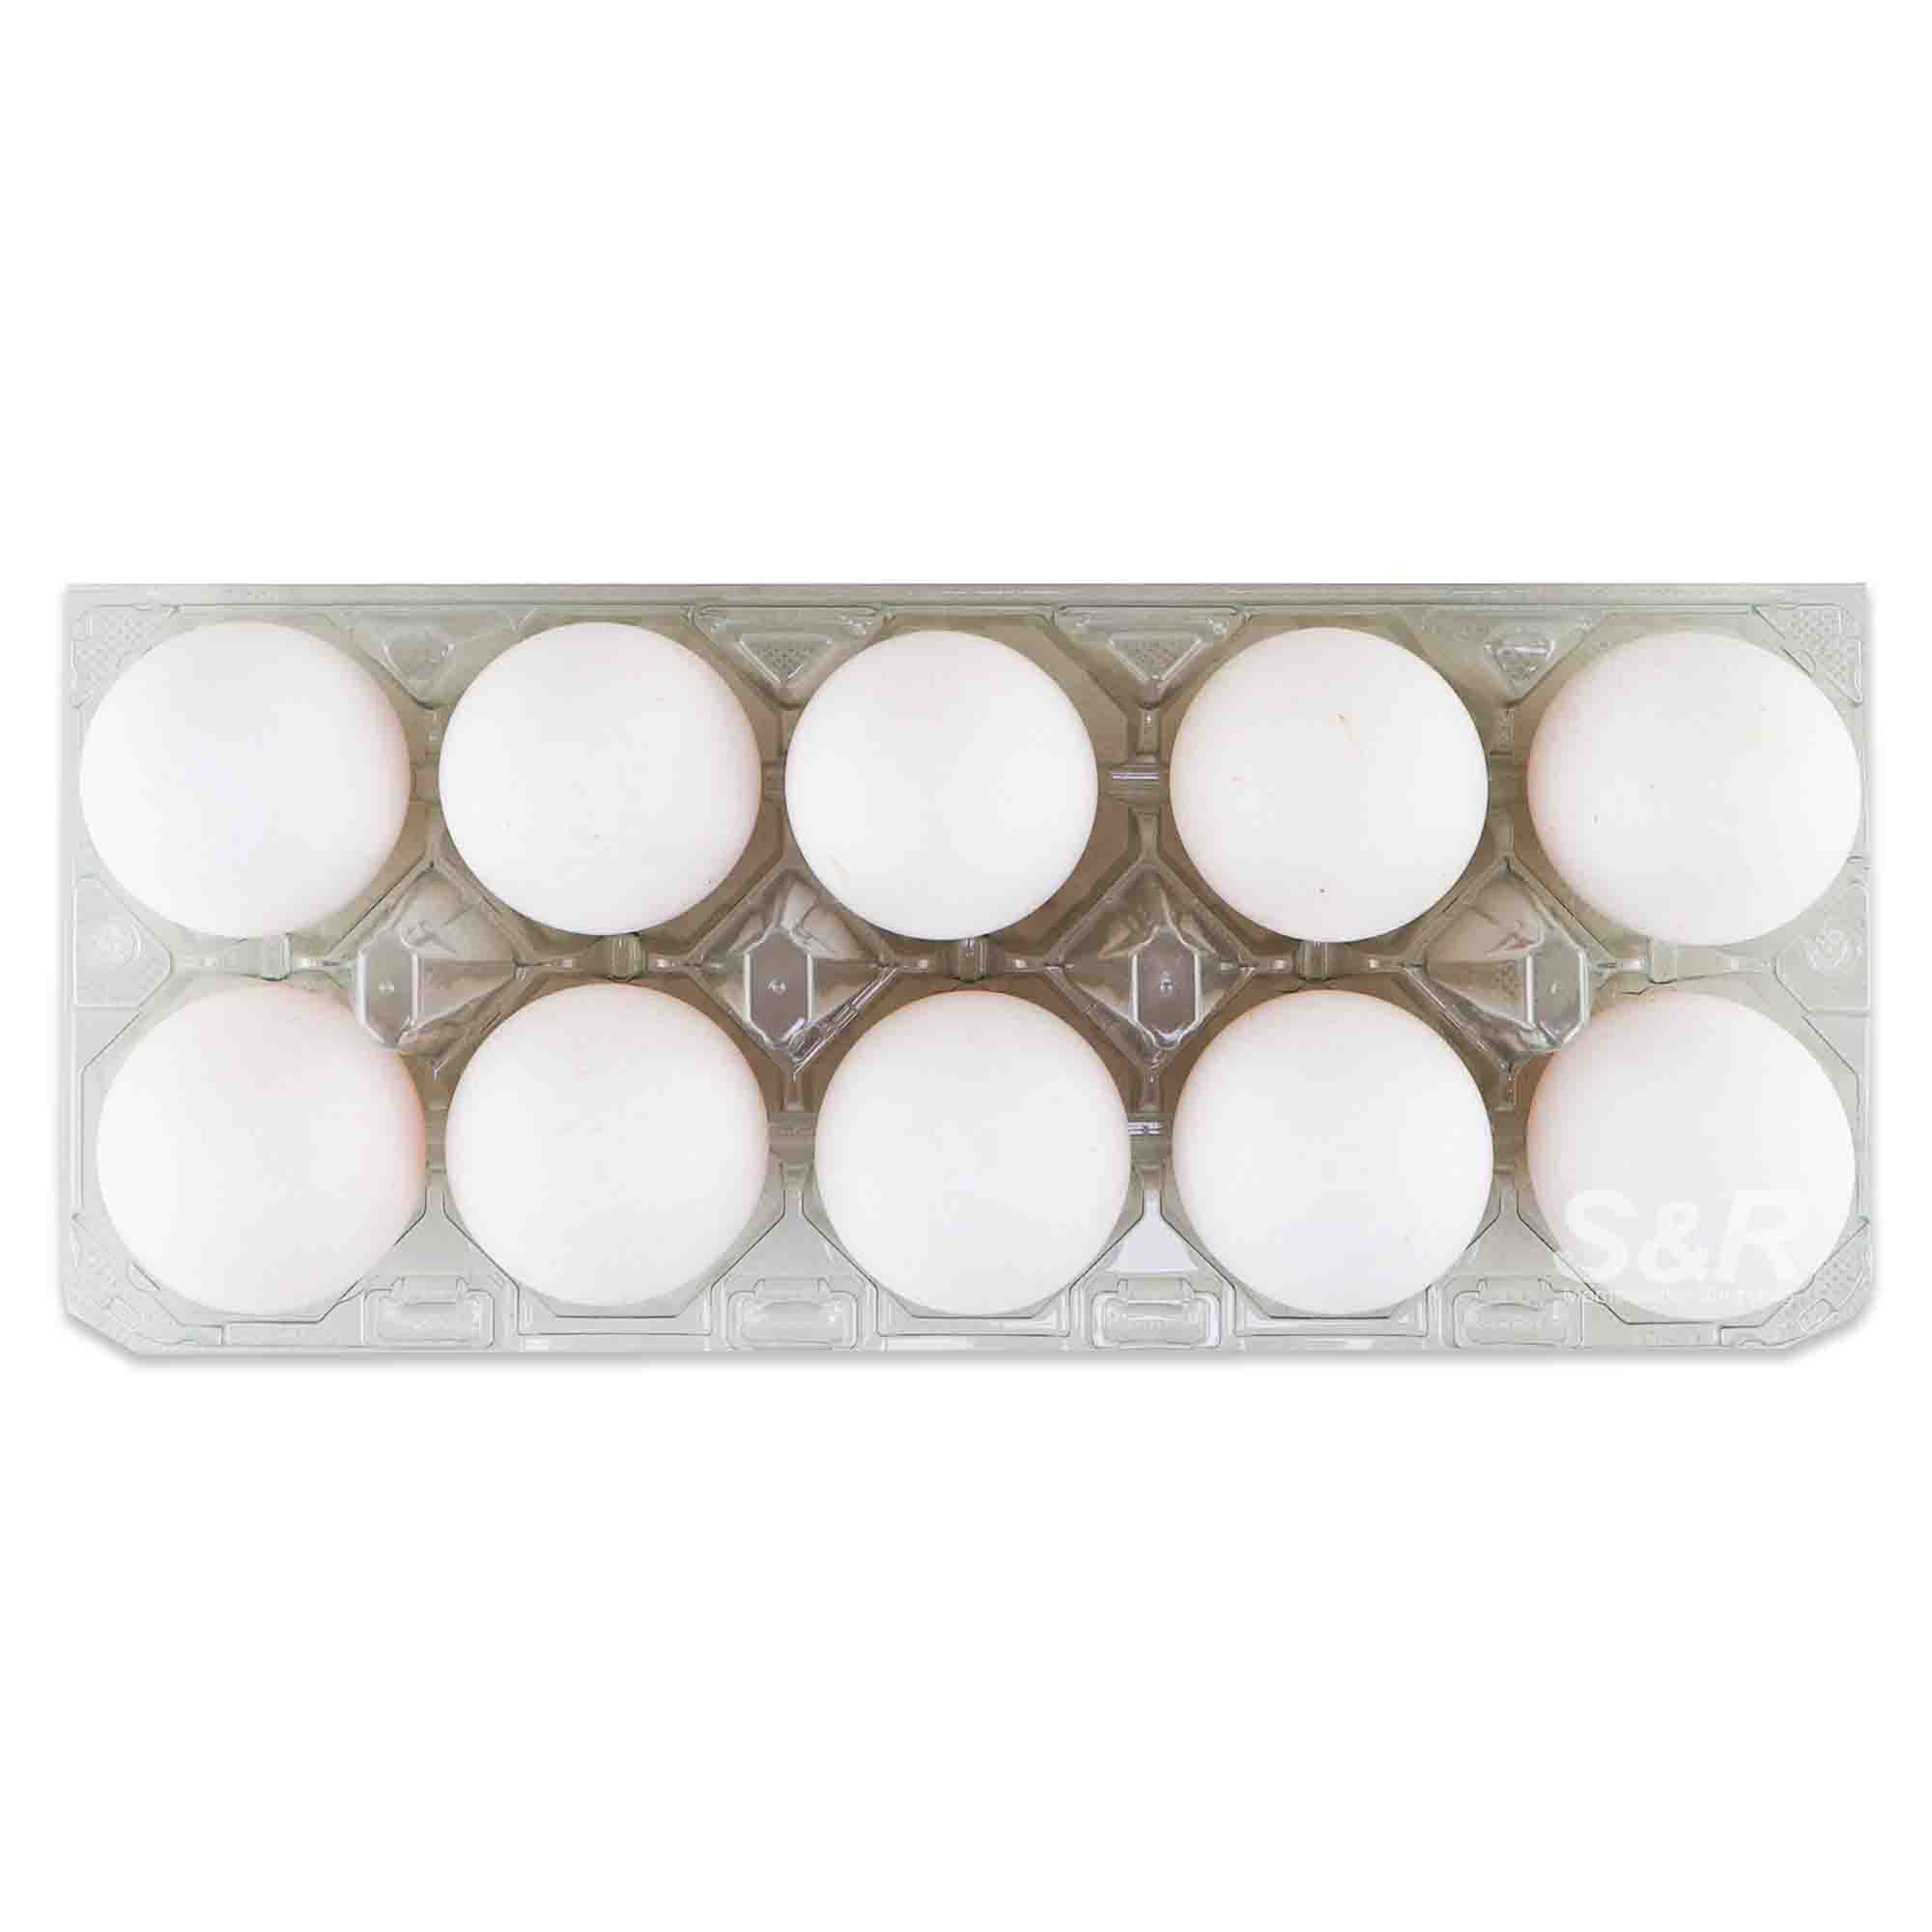 Bounty Fresh Premium Jumbo Eggs 10pcs